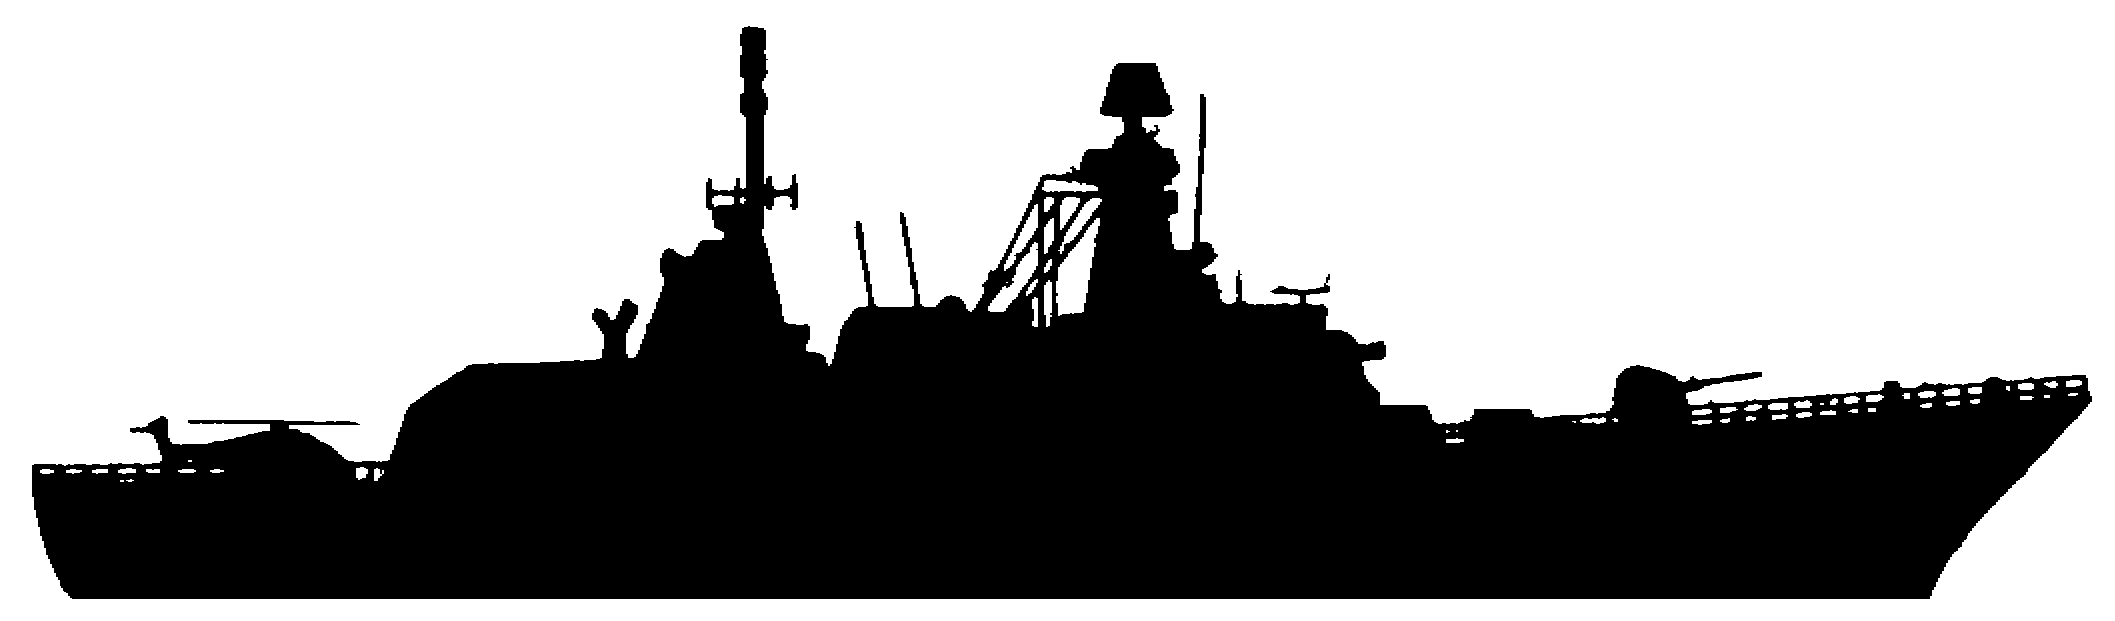 ship silhouette clip art - photo #23